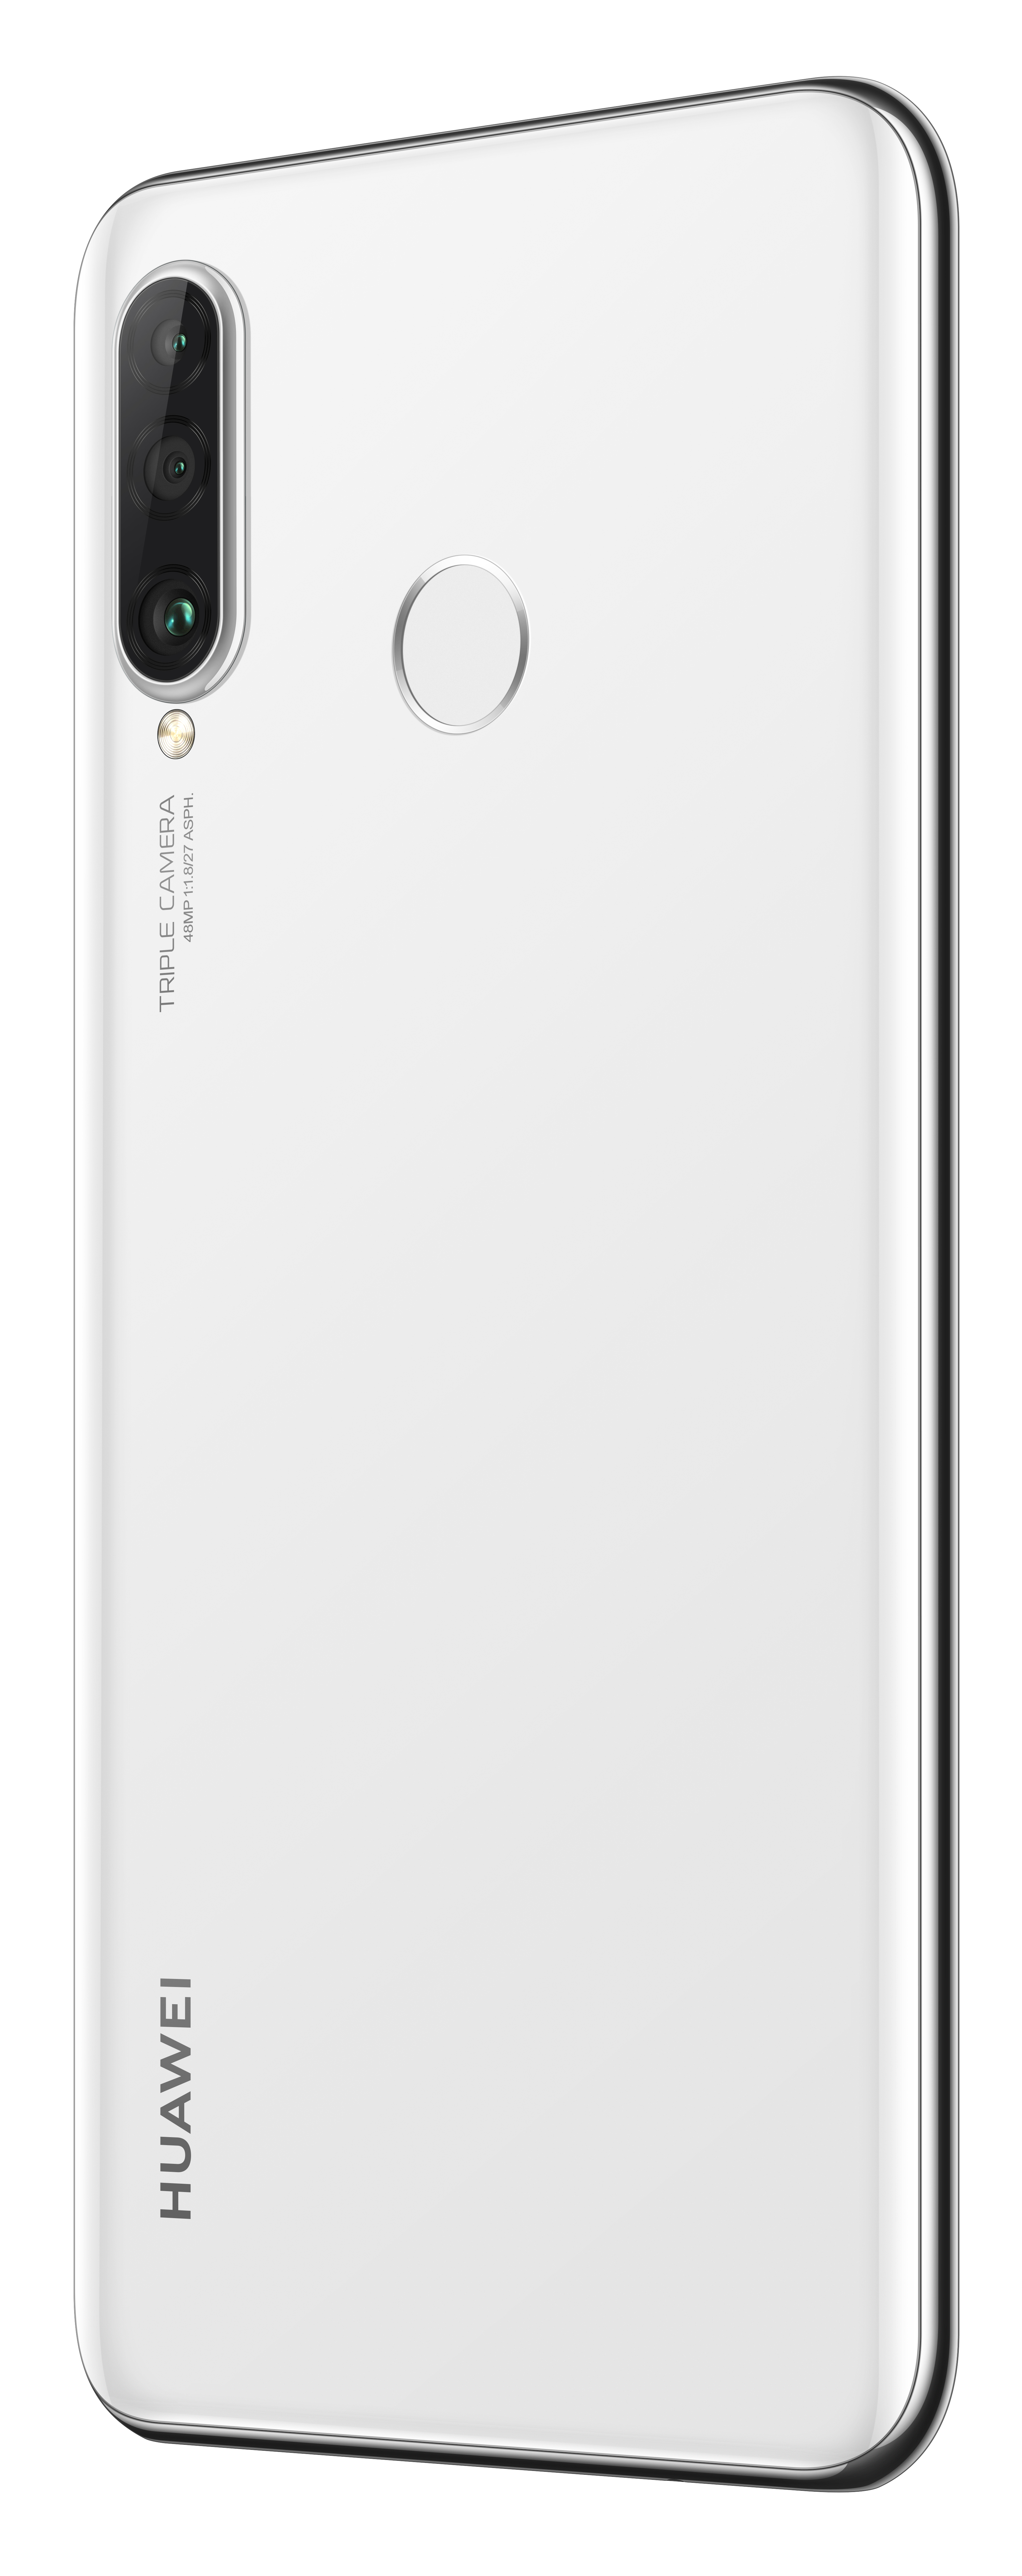 Huawei P30 Lite White. (Bild: Huawei)